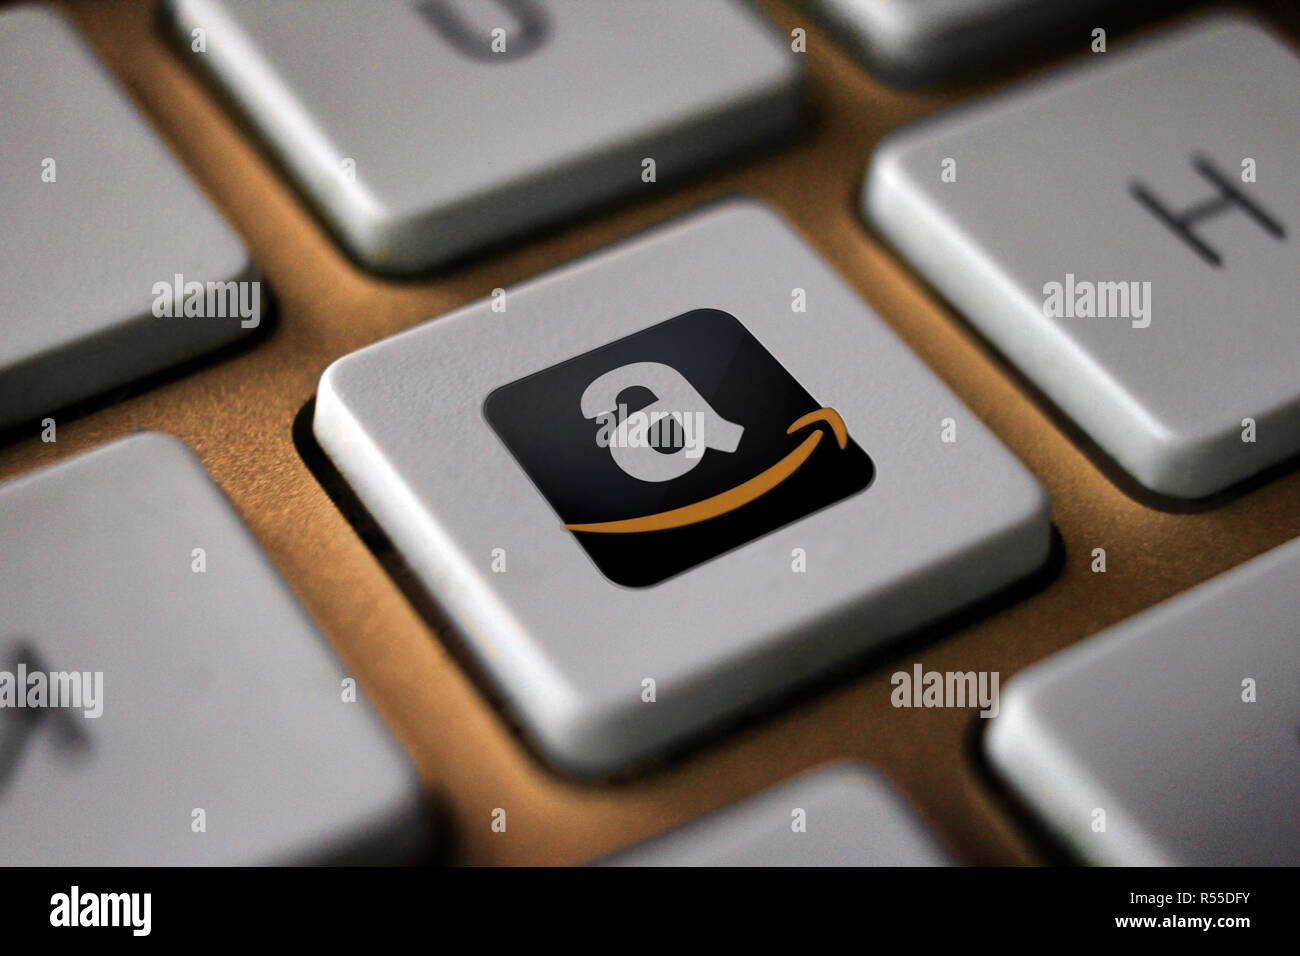 Amazon logo Symbol auf dem Computer Tastatur Taste Abbildung  Stockfotografie - Alamy